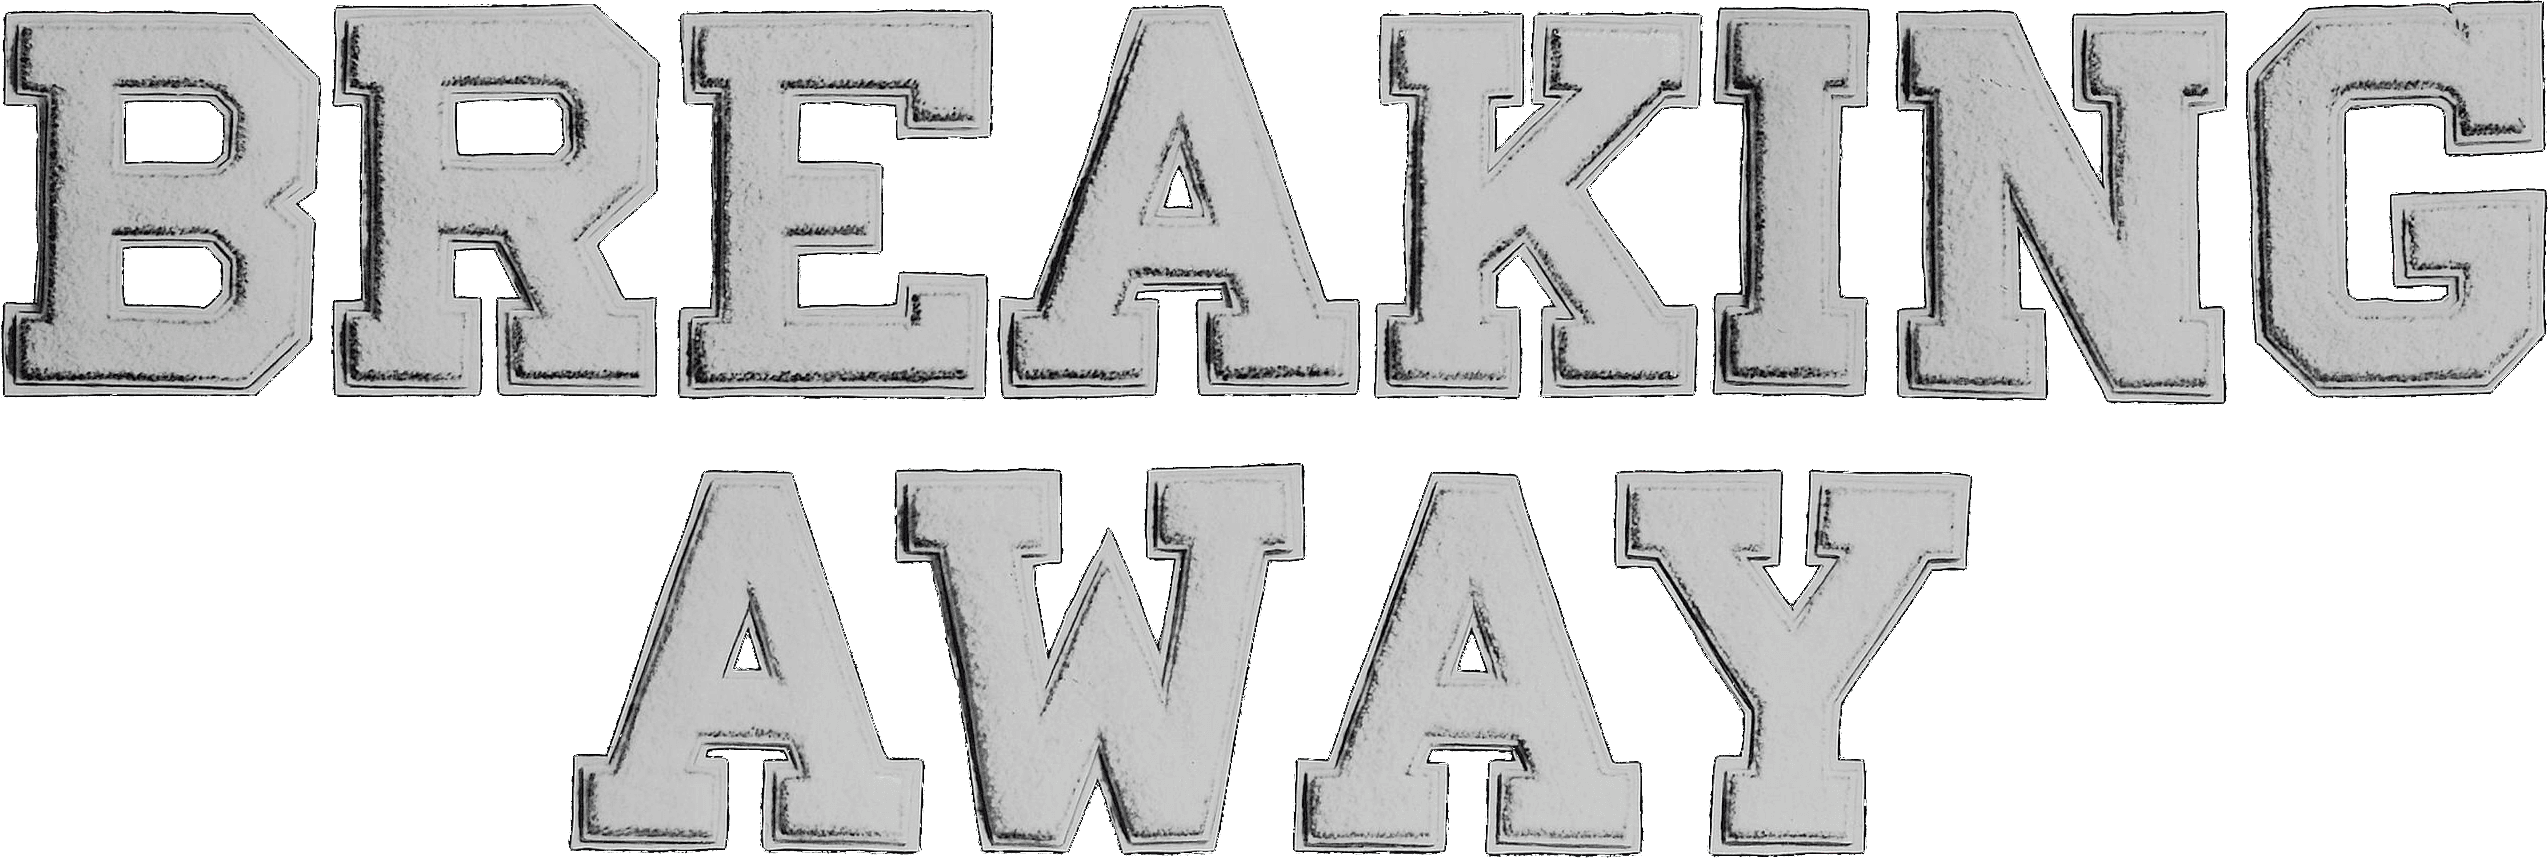 Breaking Away logo